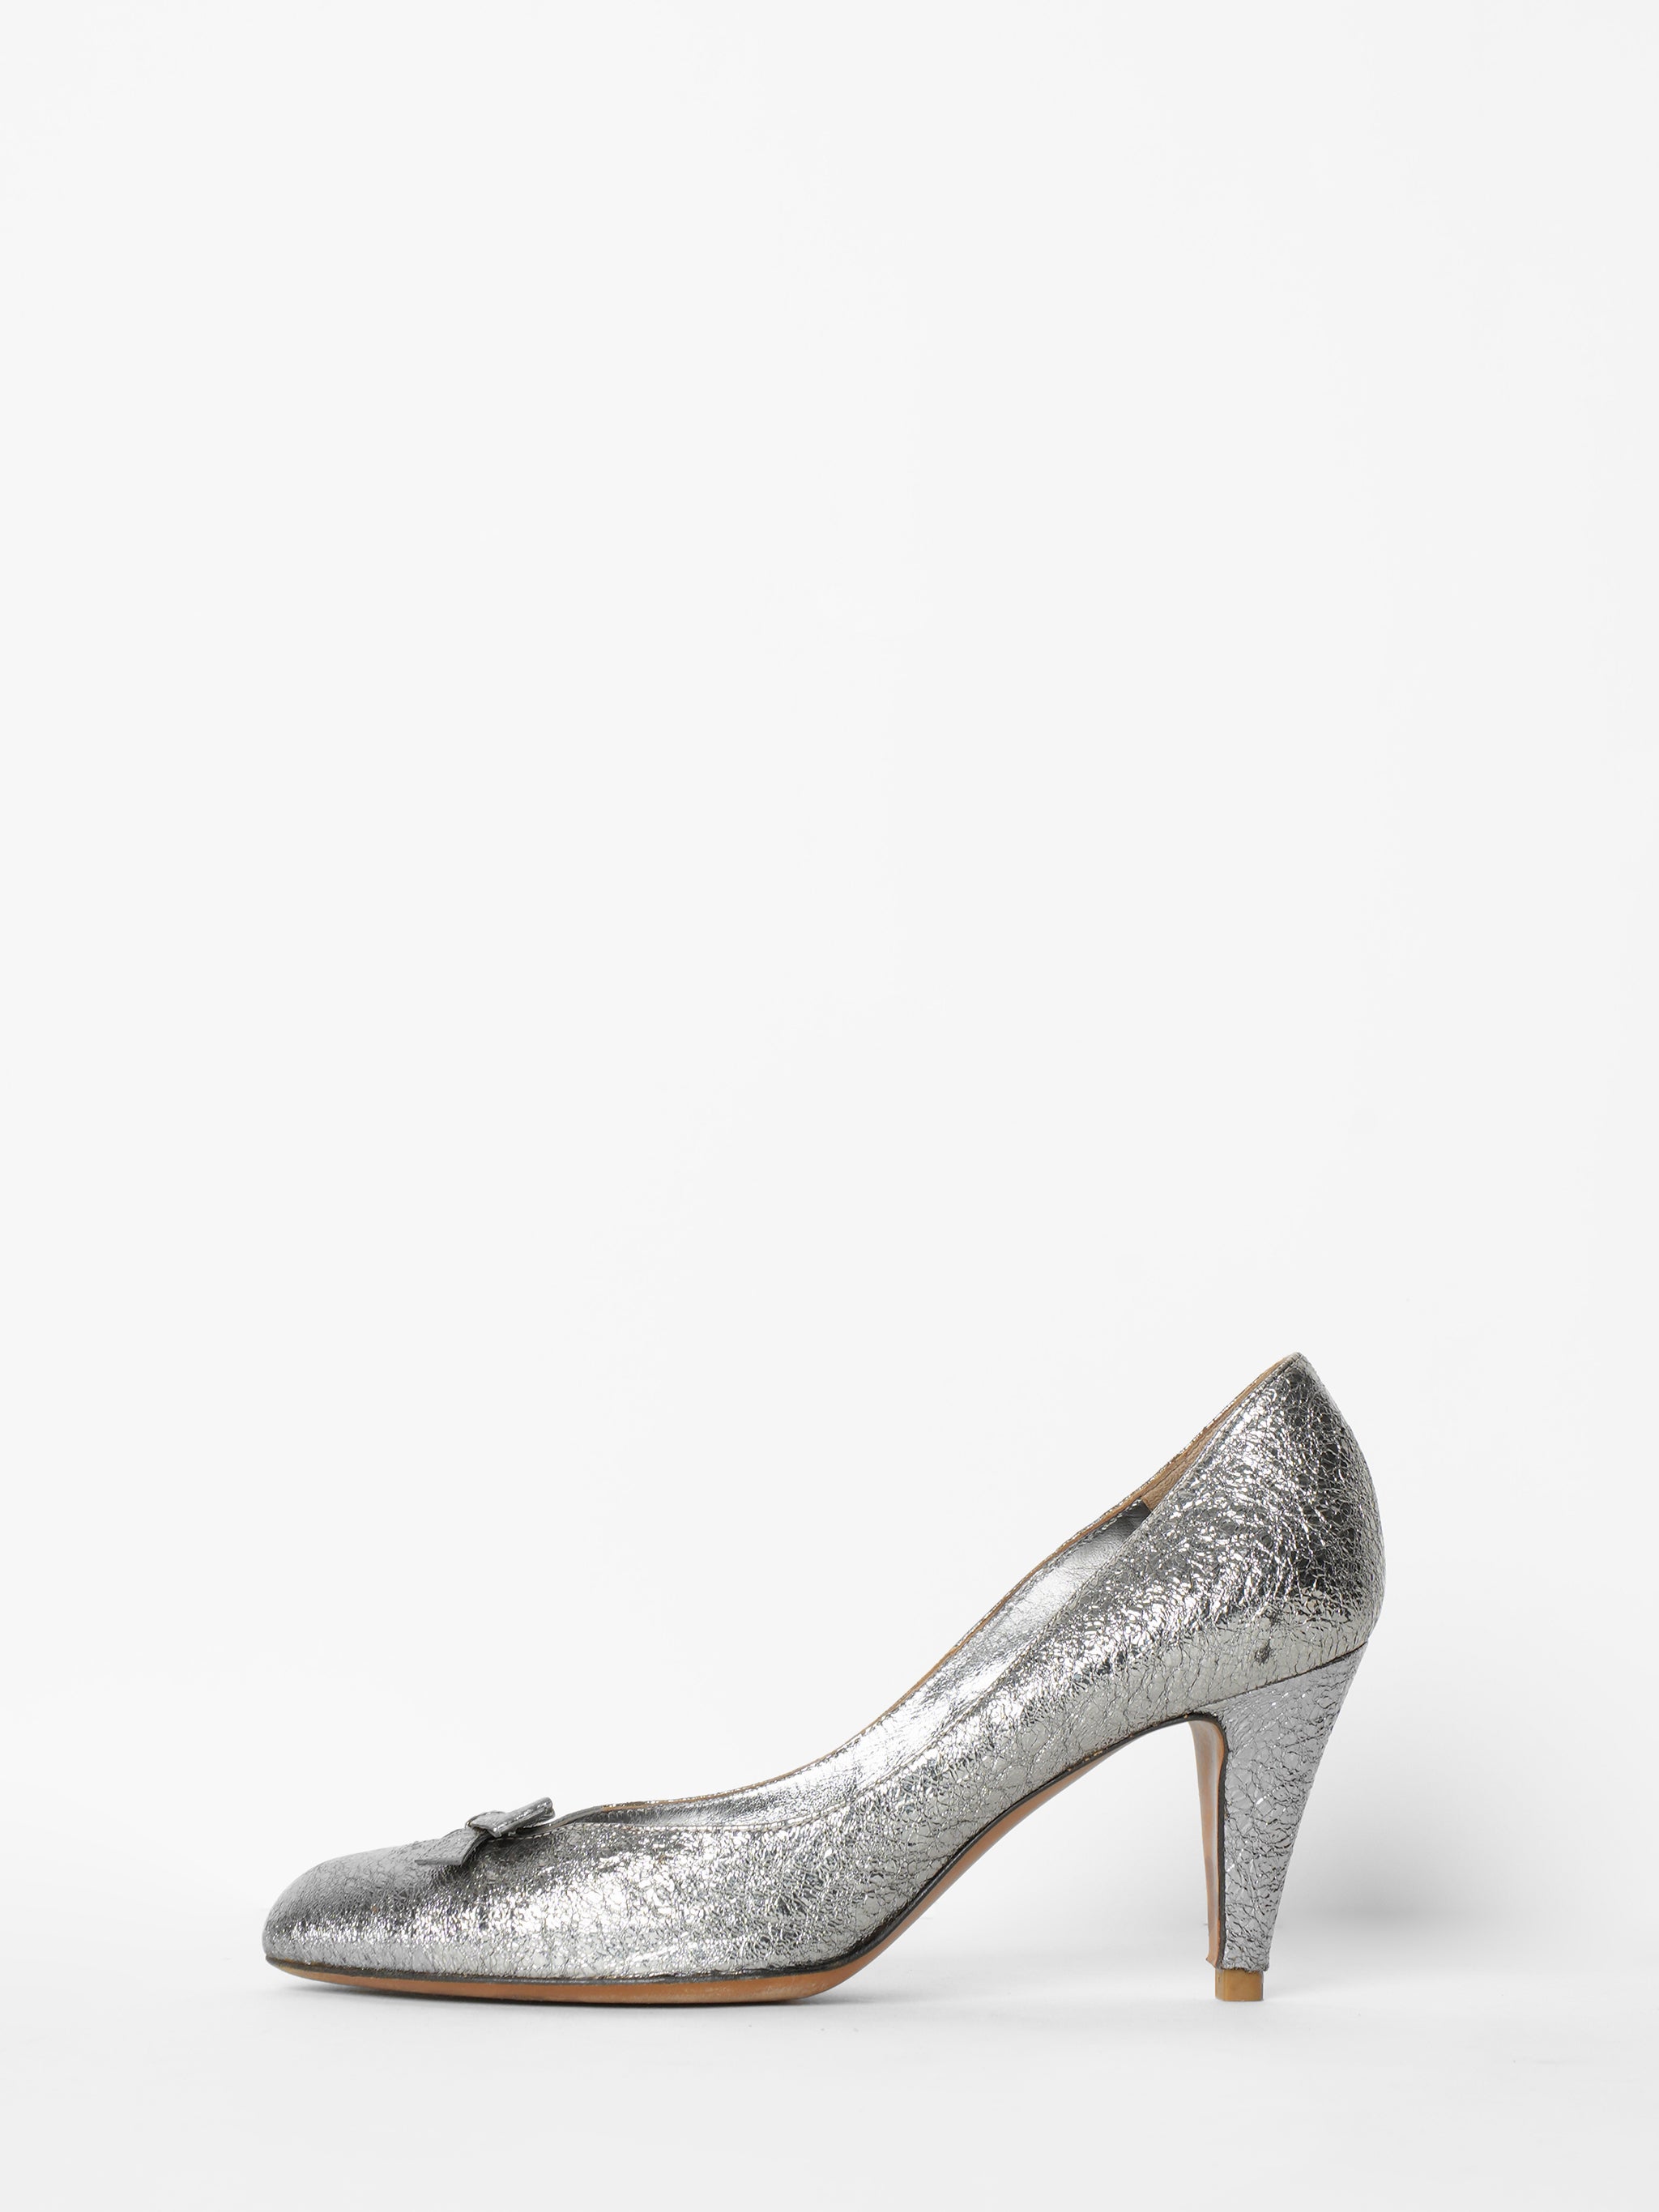 Moschino Silver Heels